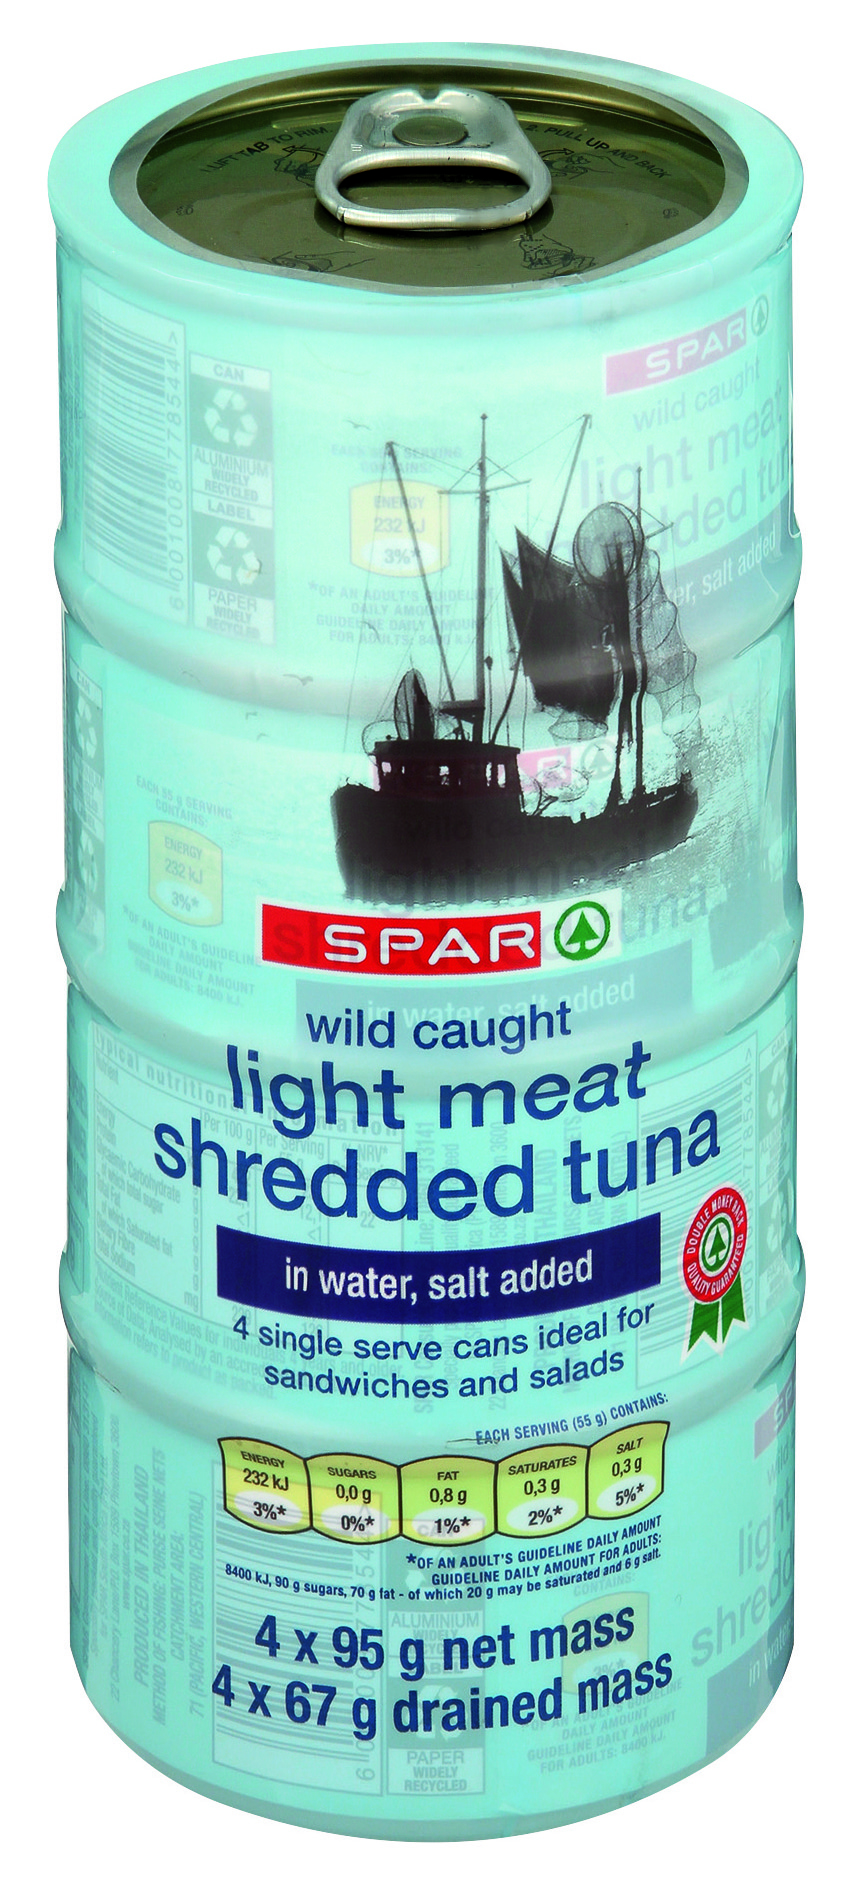 shredded tuna in water